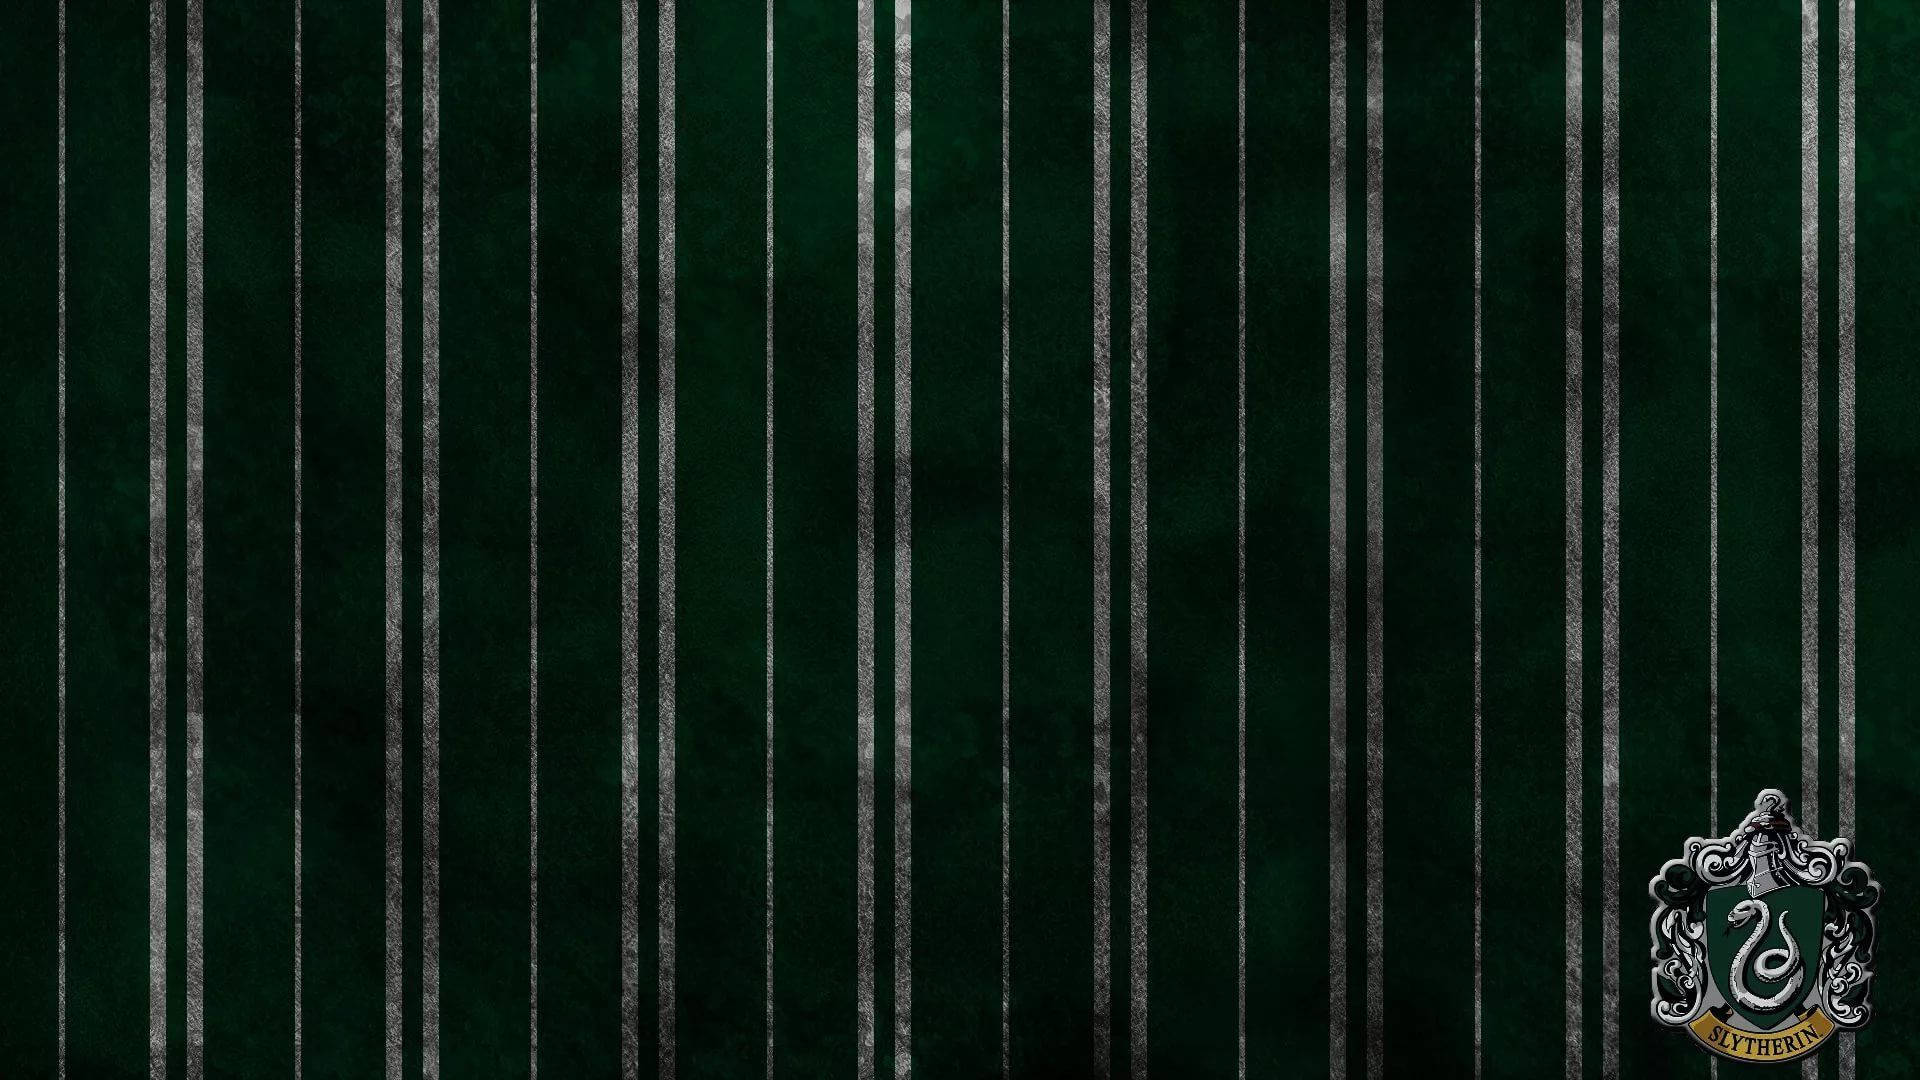 Slytherin Aesthetic Dark Green Fabric Wallpaper